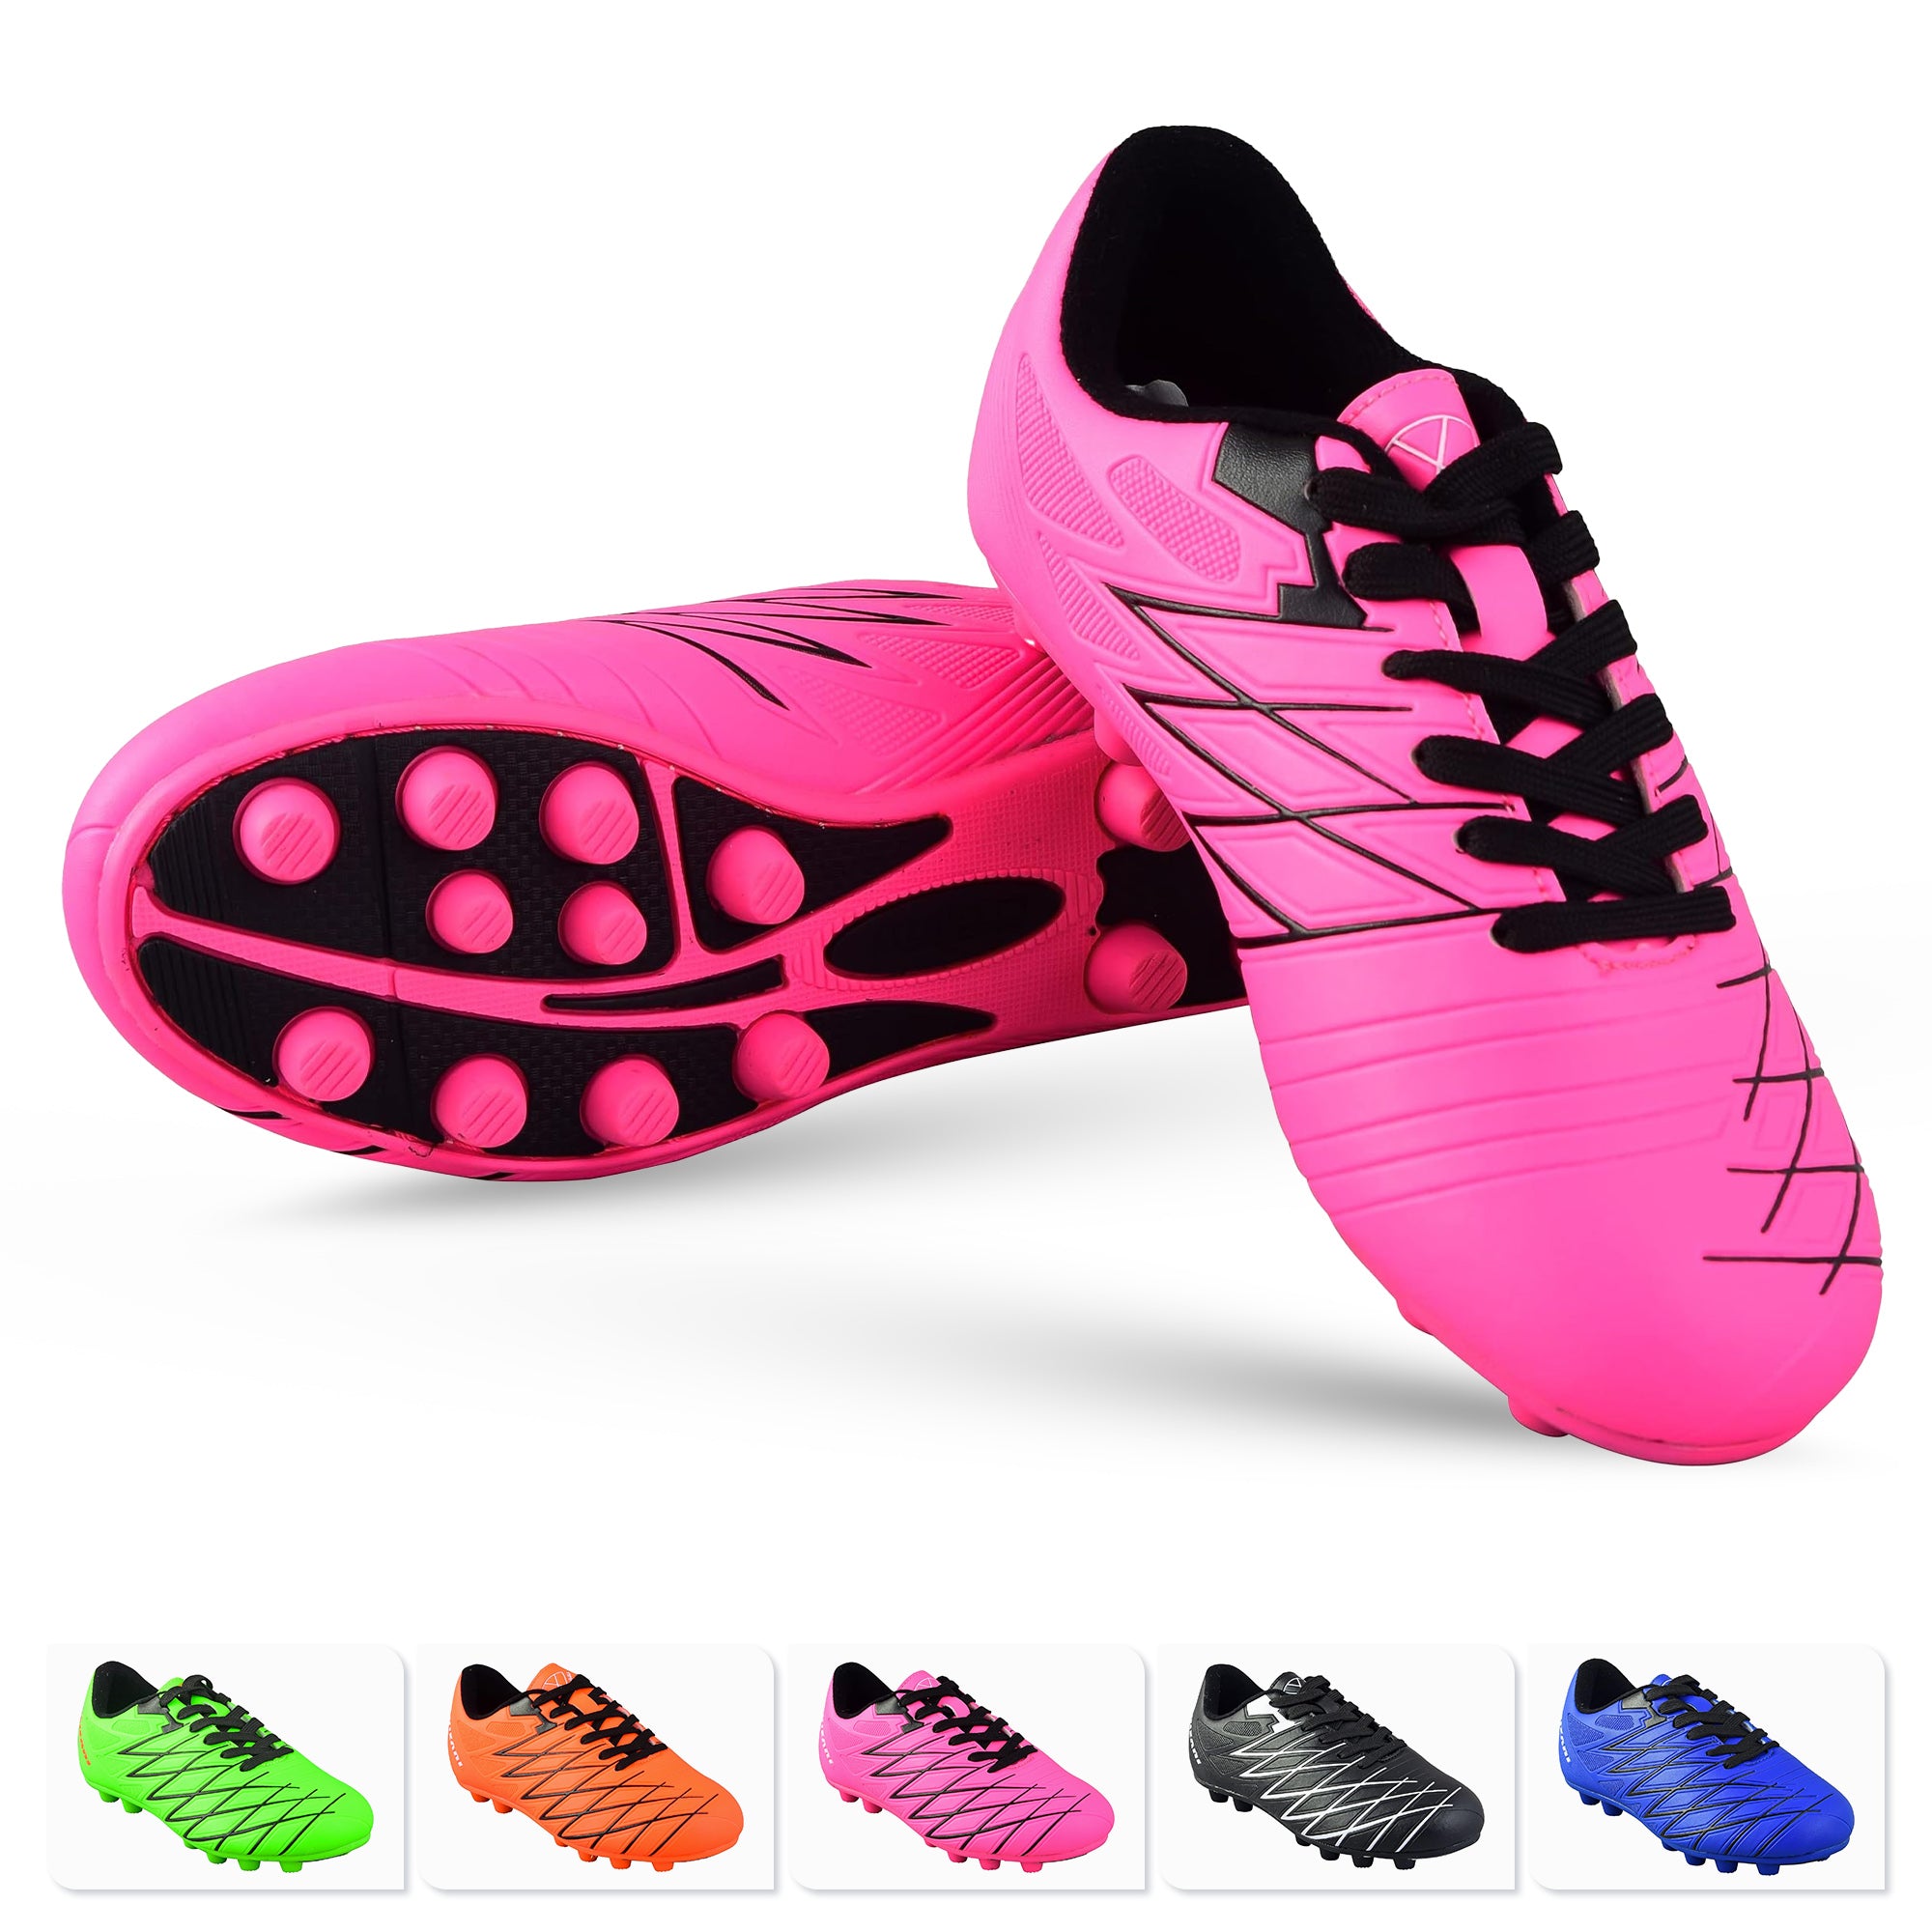 Boca Firm Ground Soccer Shoes - Pink/Black